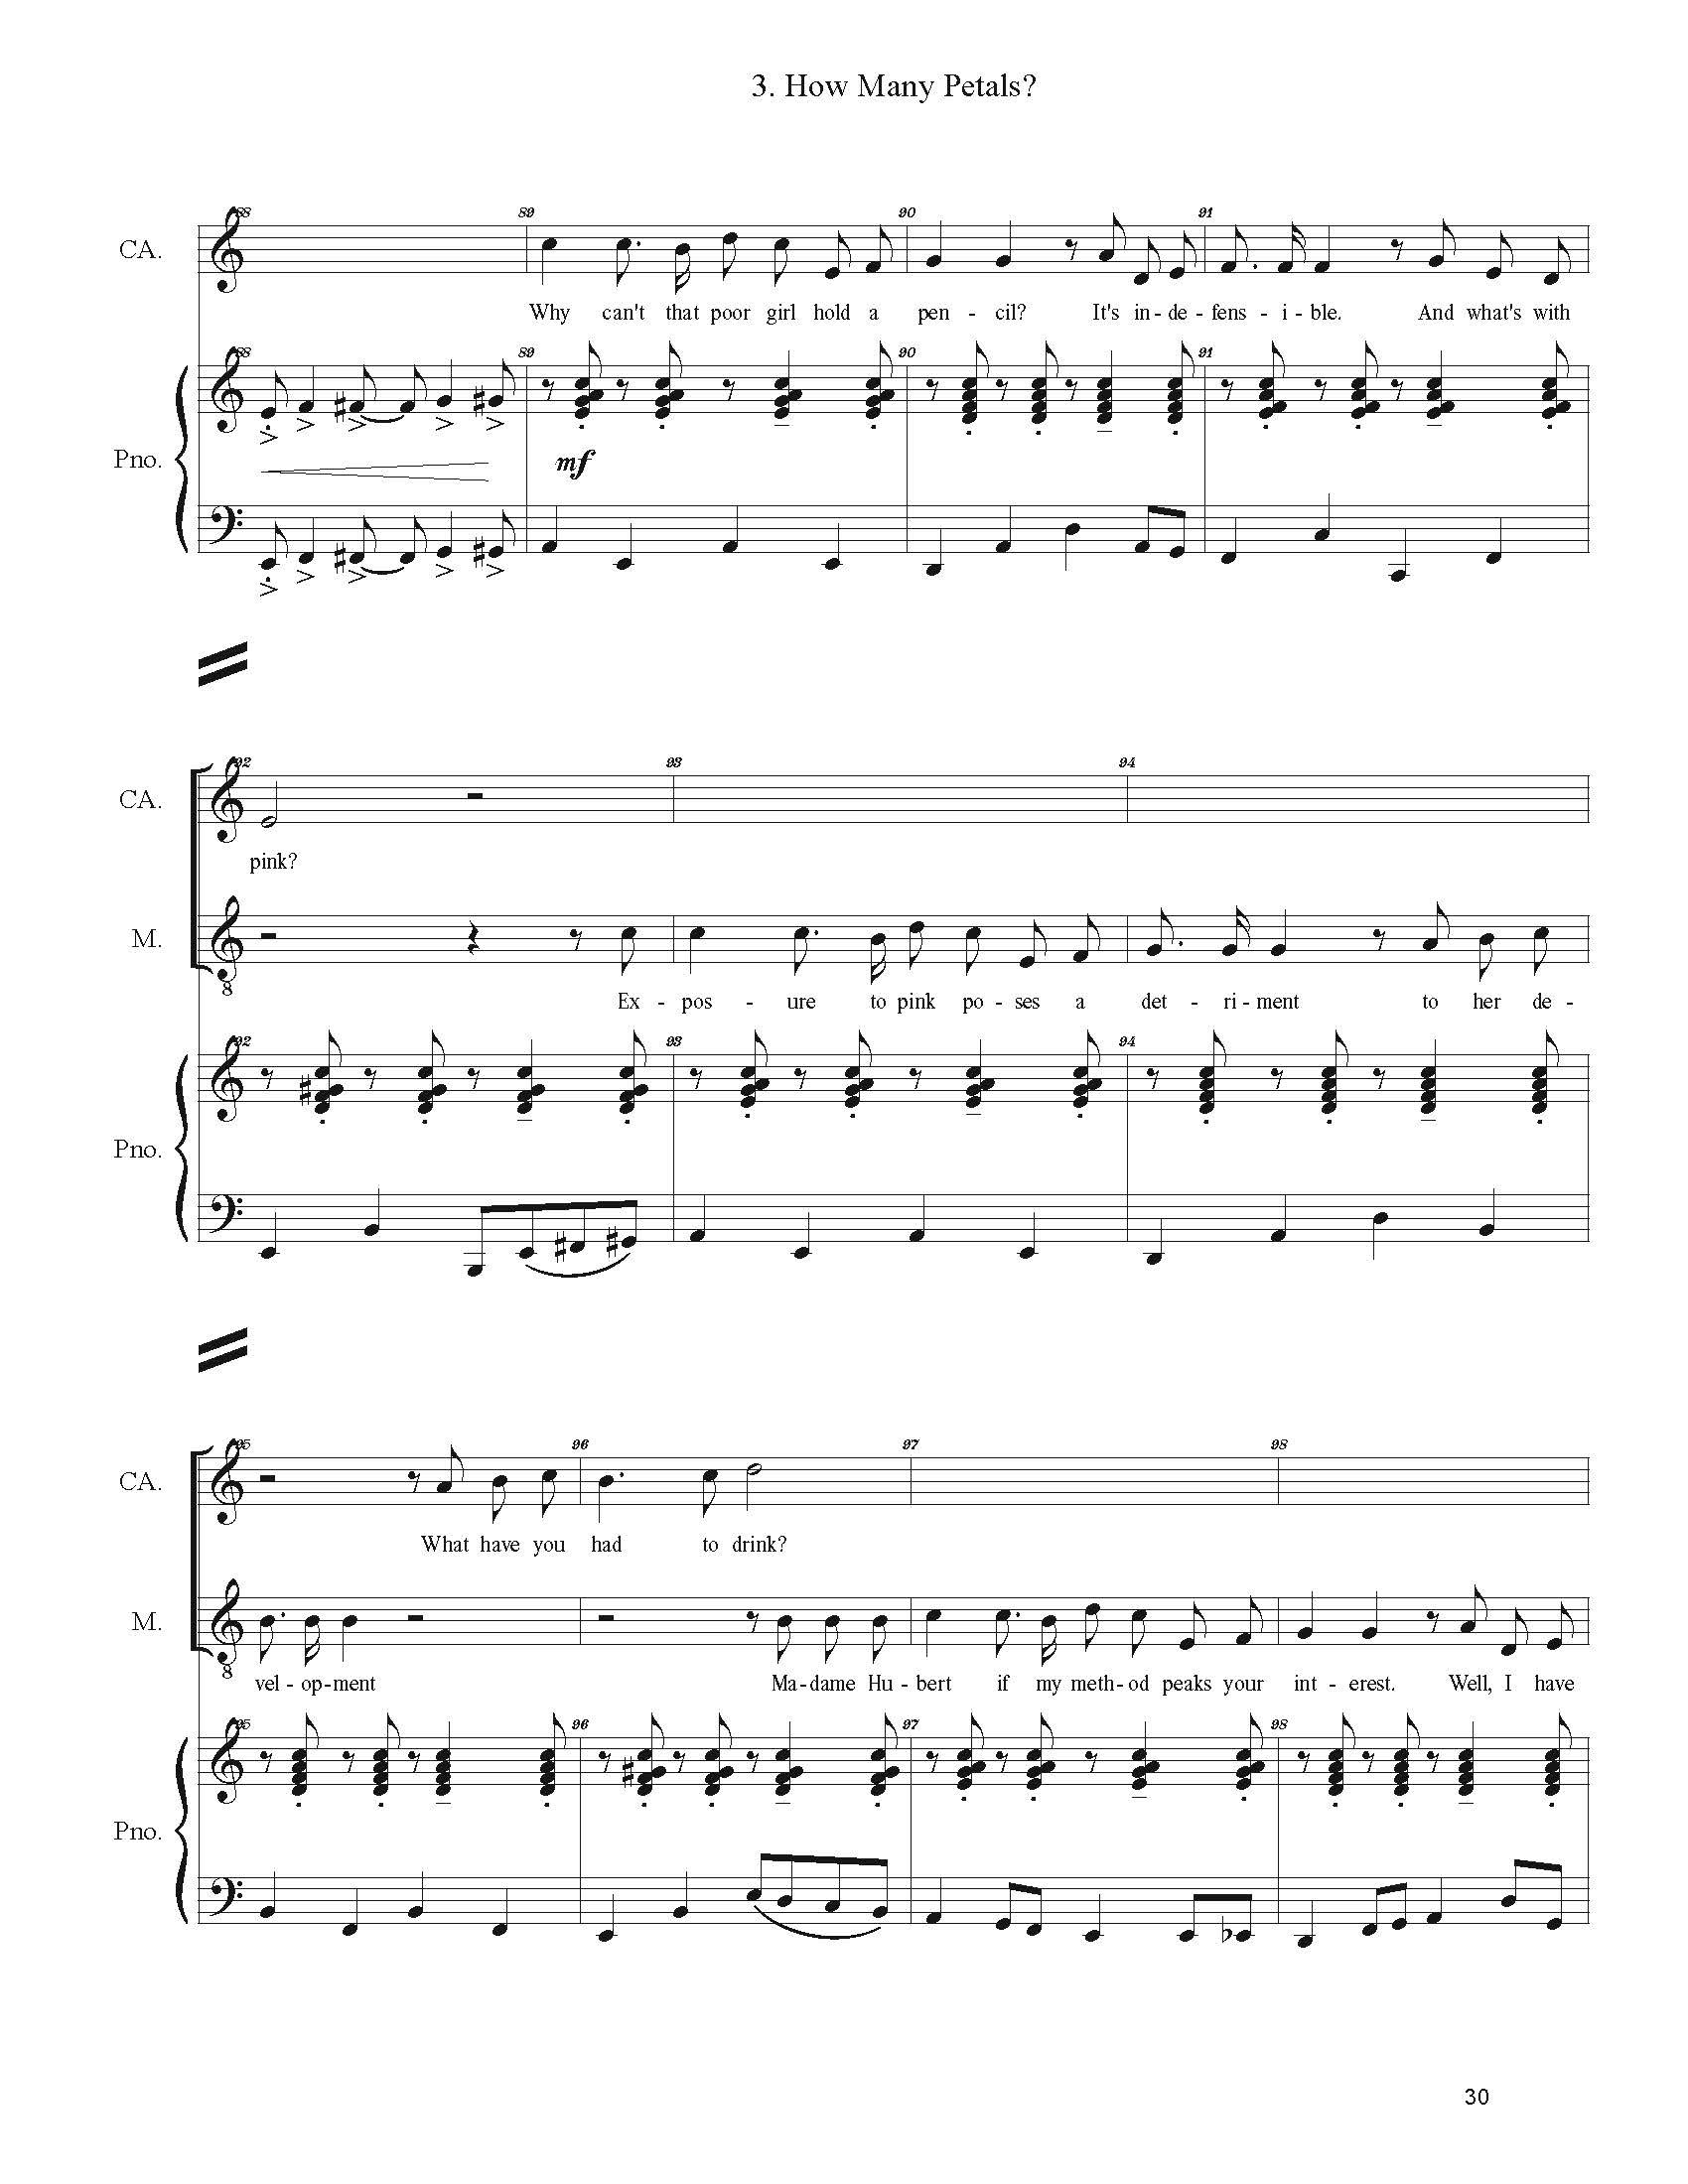 FULL PIANO VOCAL SCORE DRAFT 1 - Score_Page_030.jpg